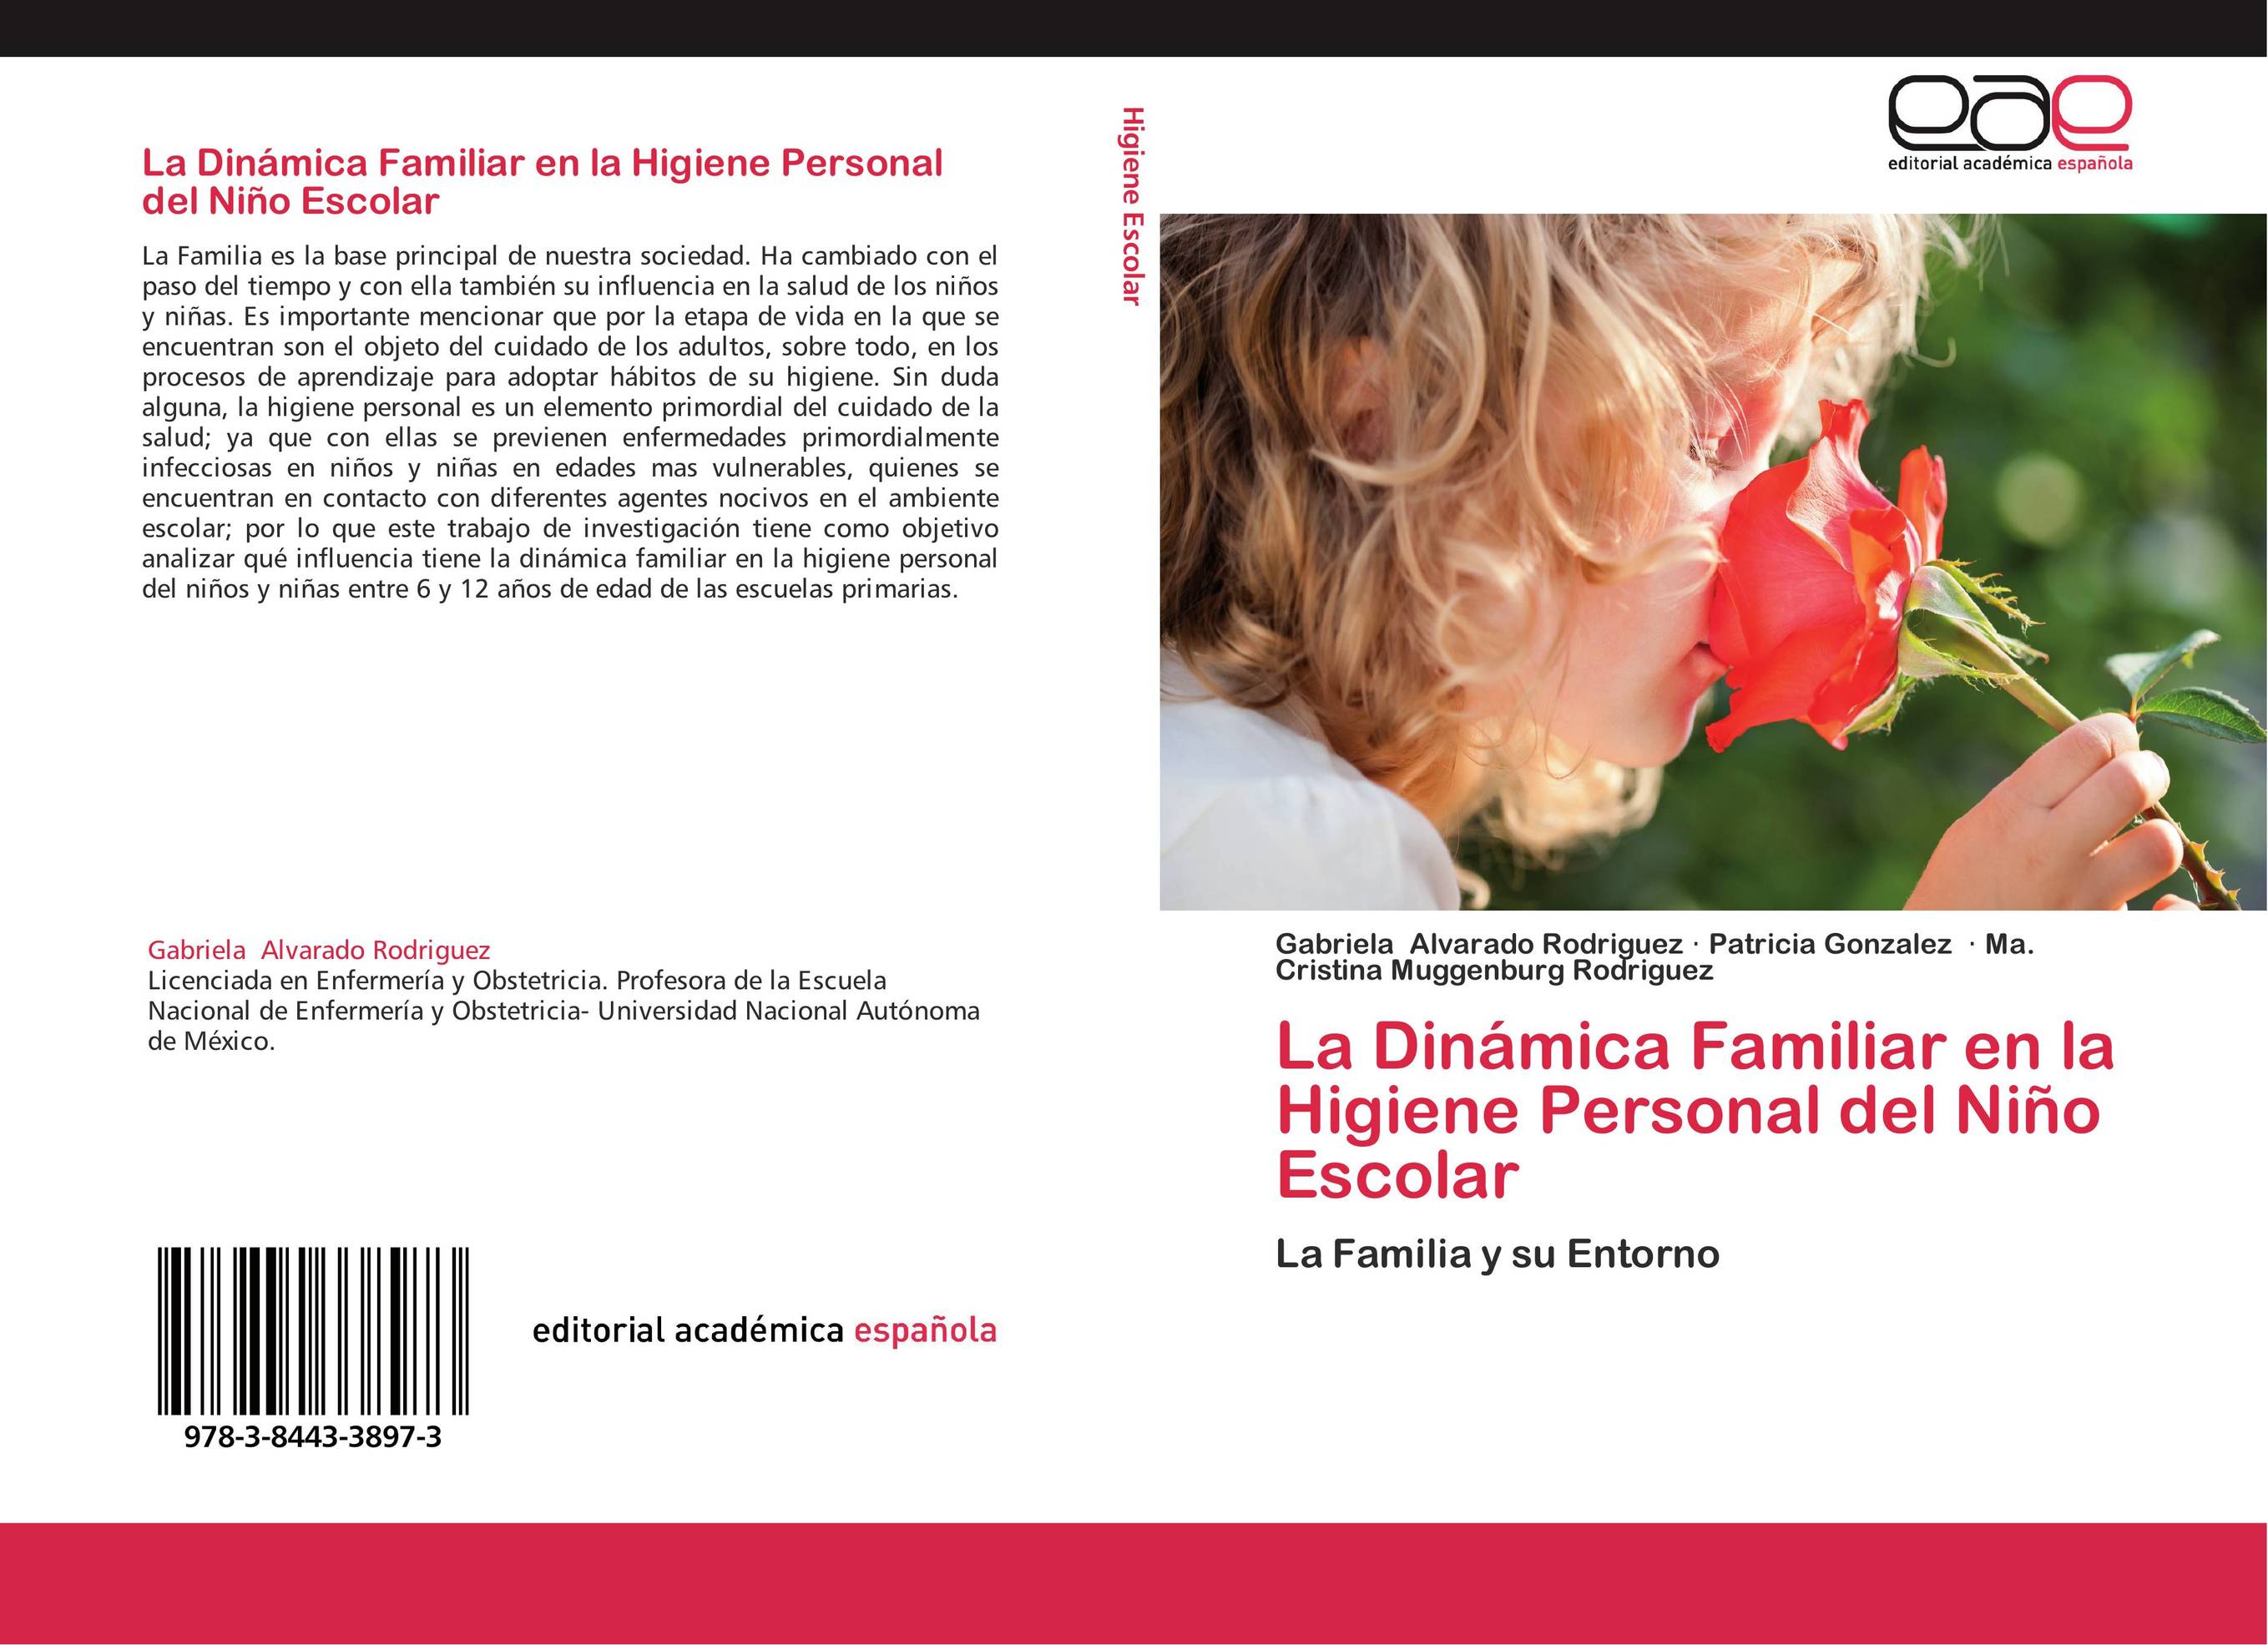 La Dinámica Familiar en la Higiene Personal del Niño Escolar